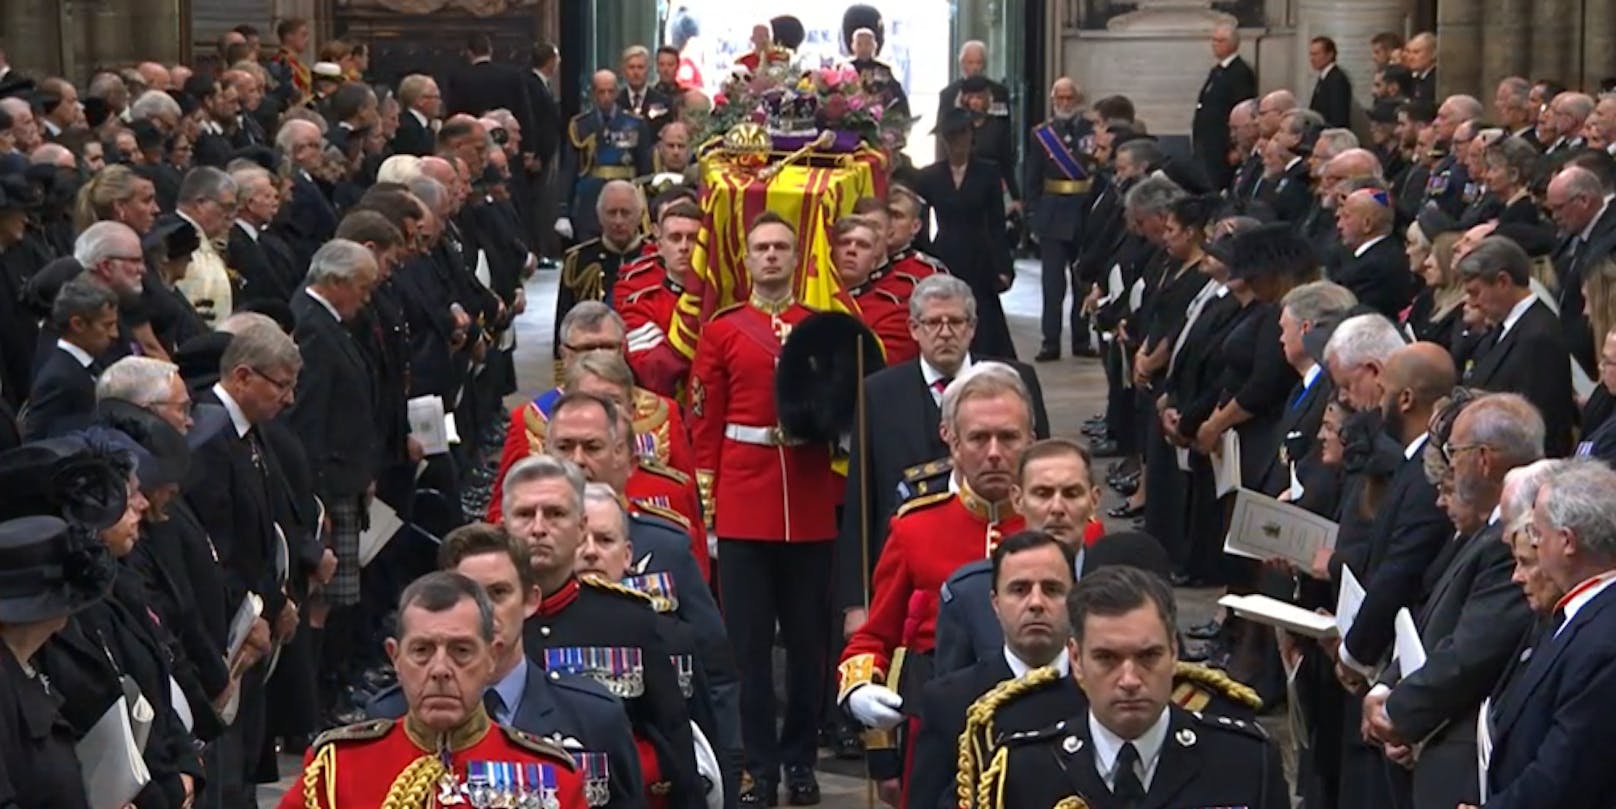 Der Sarg kommt in der Westminster Abbey an.